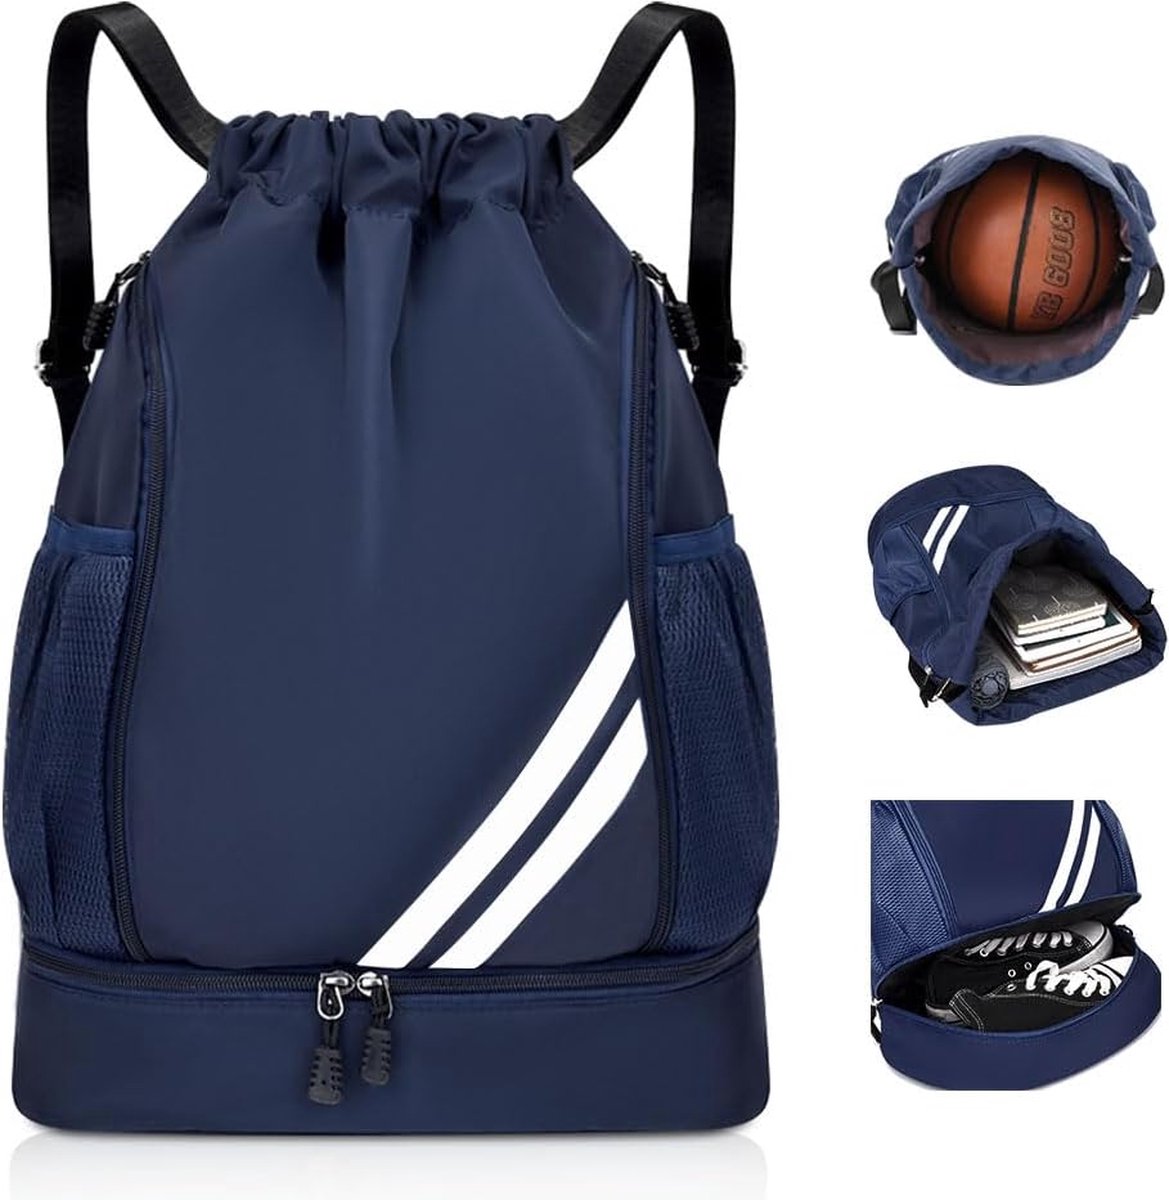 SHOP YOLO-Sporttas heren-verstelbare sporttas met schoenenvak-waterdichte -Donkerblauw